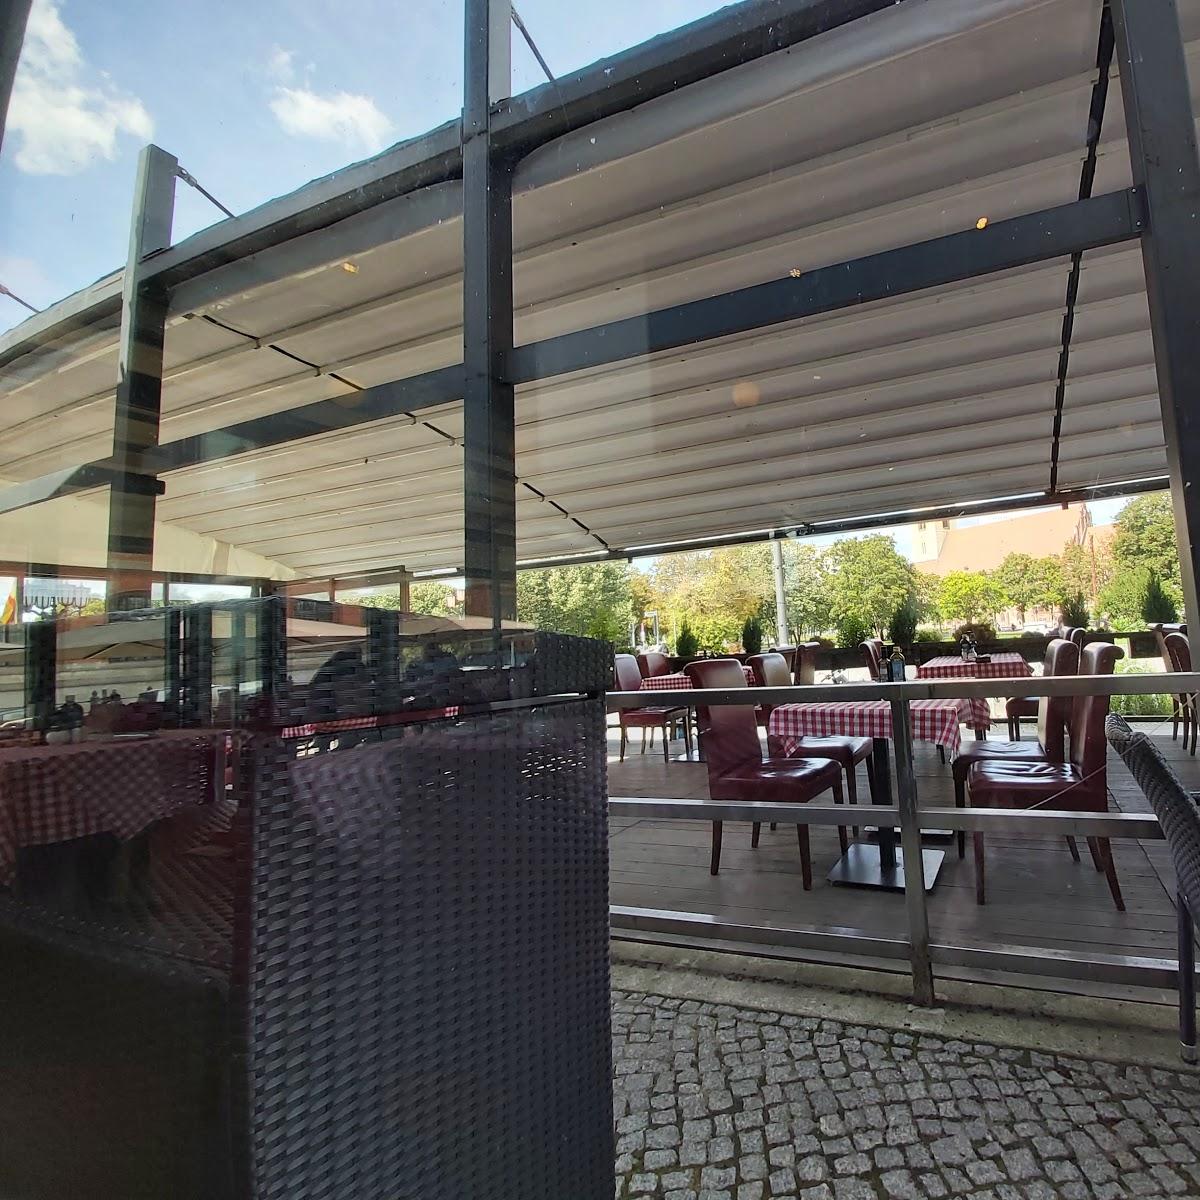 Restaurant "Ristorante Piazza Rossa" in Berlin